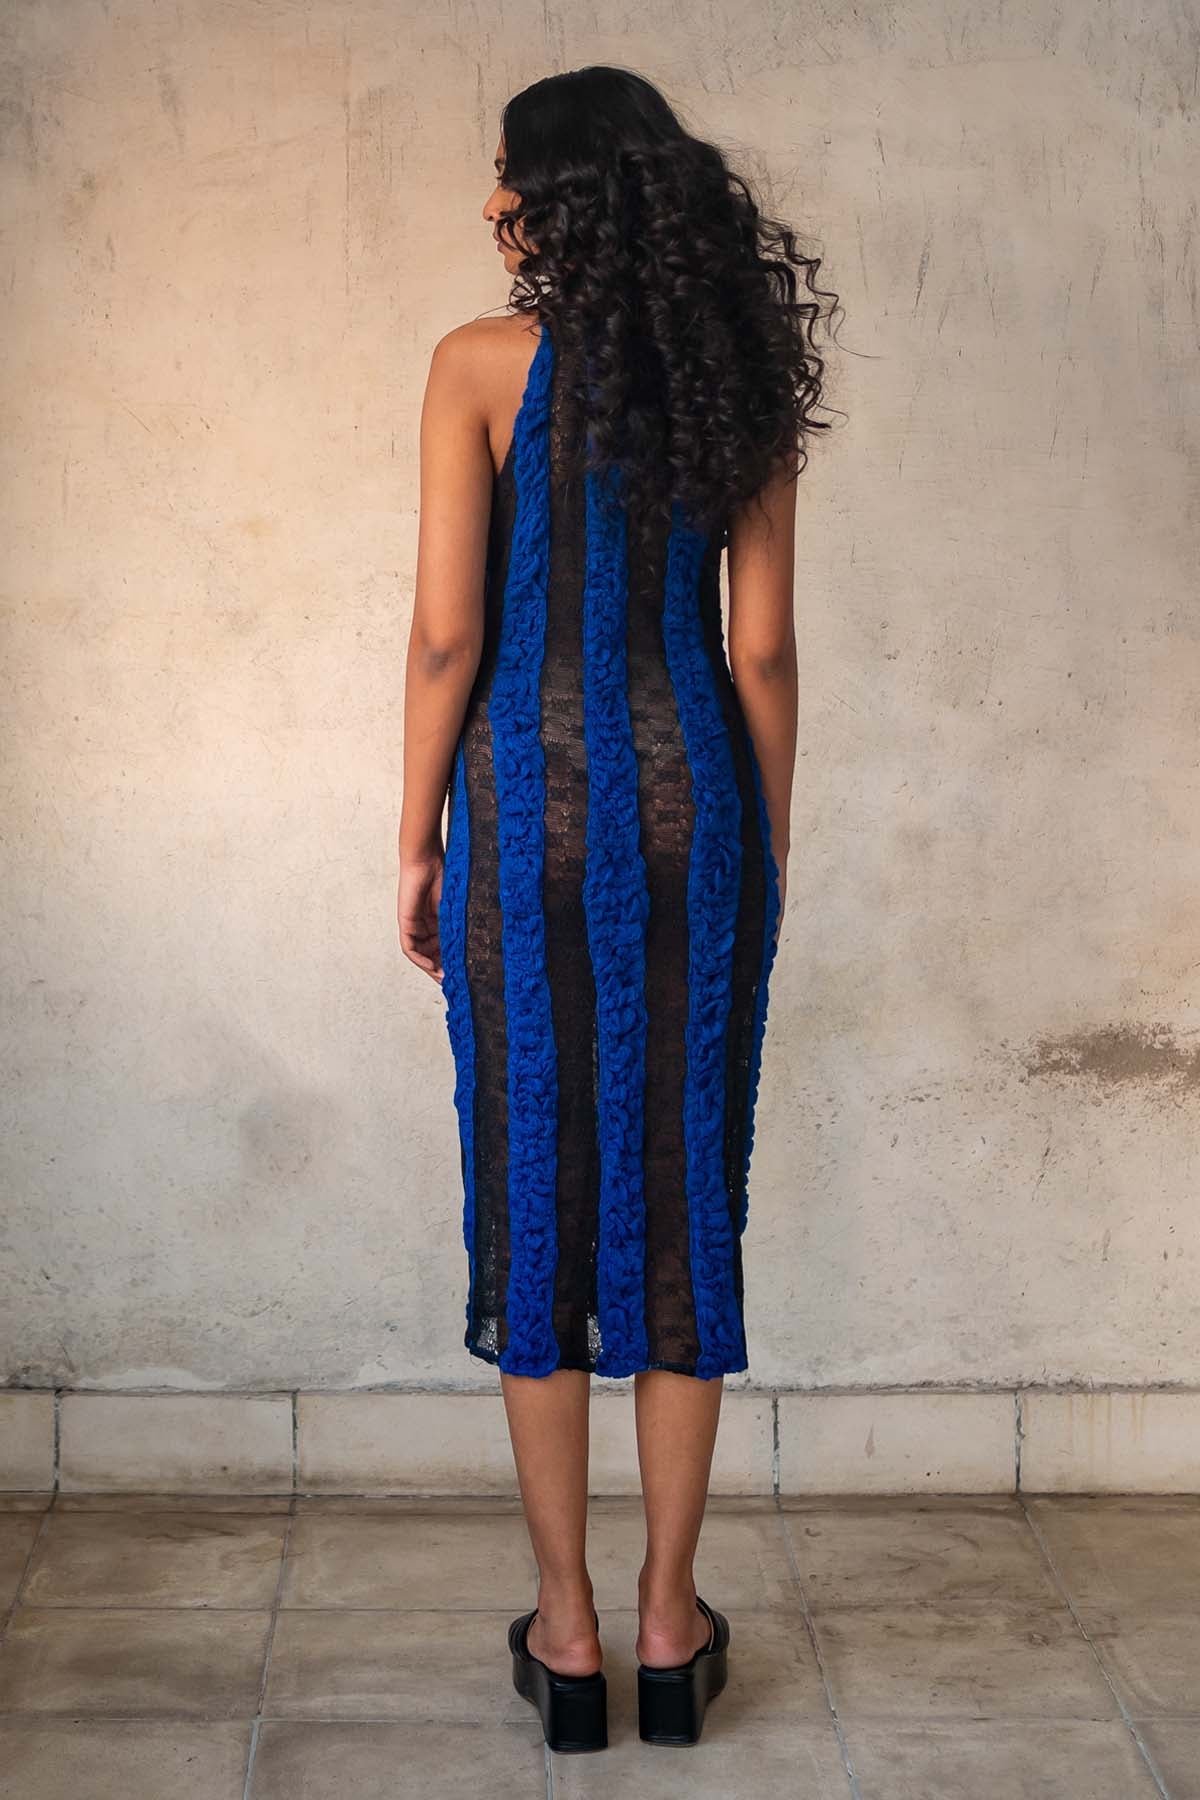 Blue Smocked Midi Dress